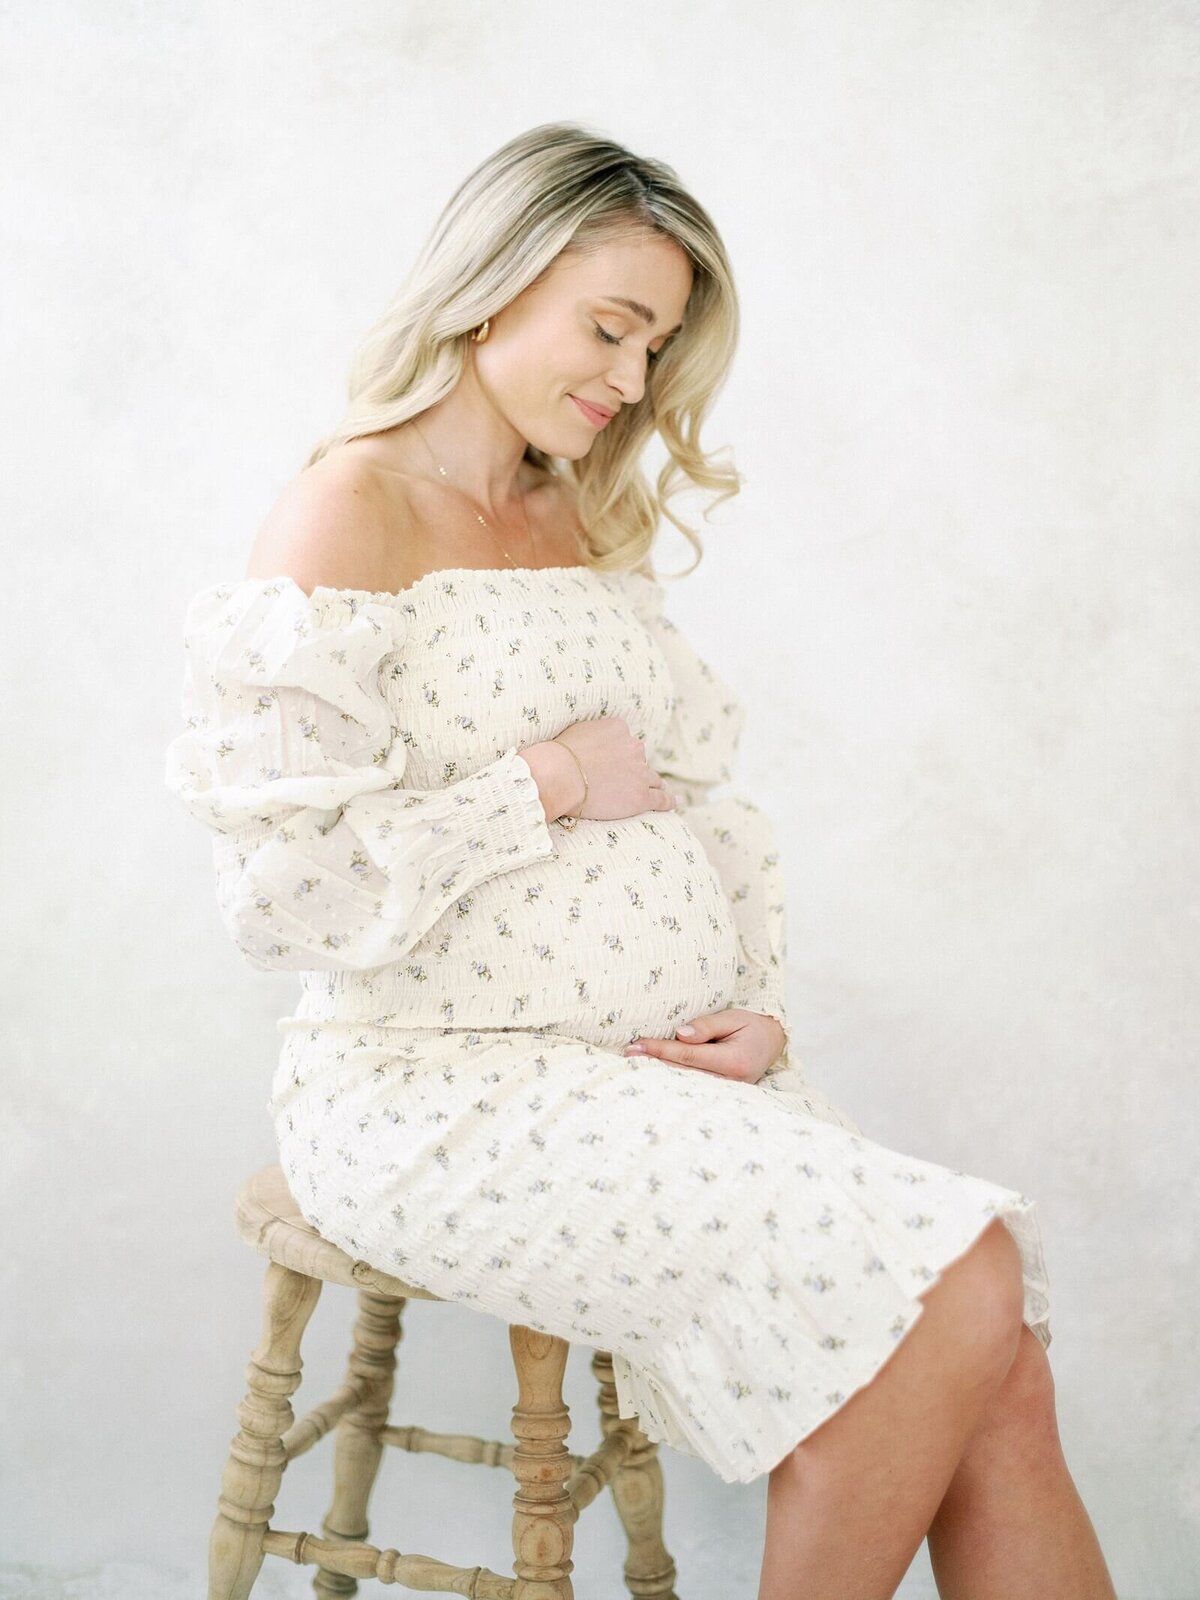 seattle-maternity-photographer-jacqueline-benet_0001